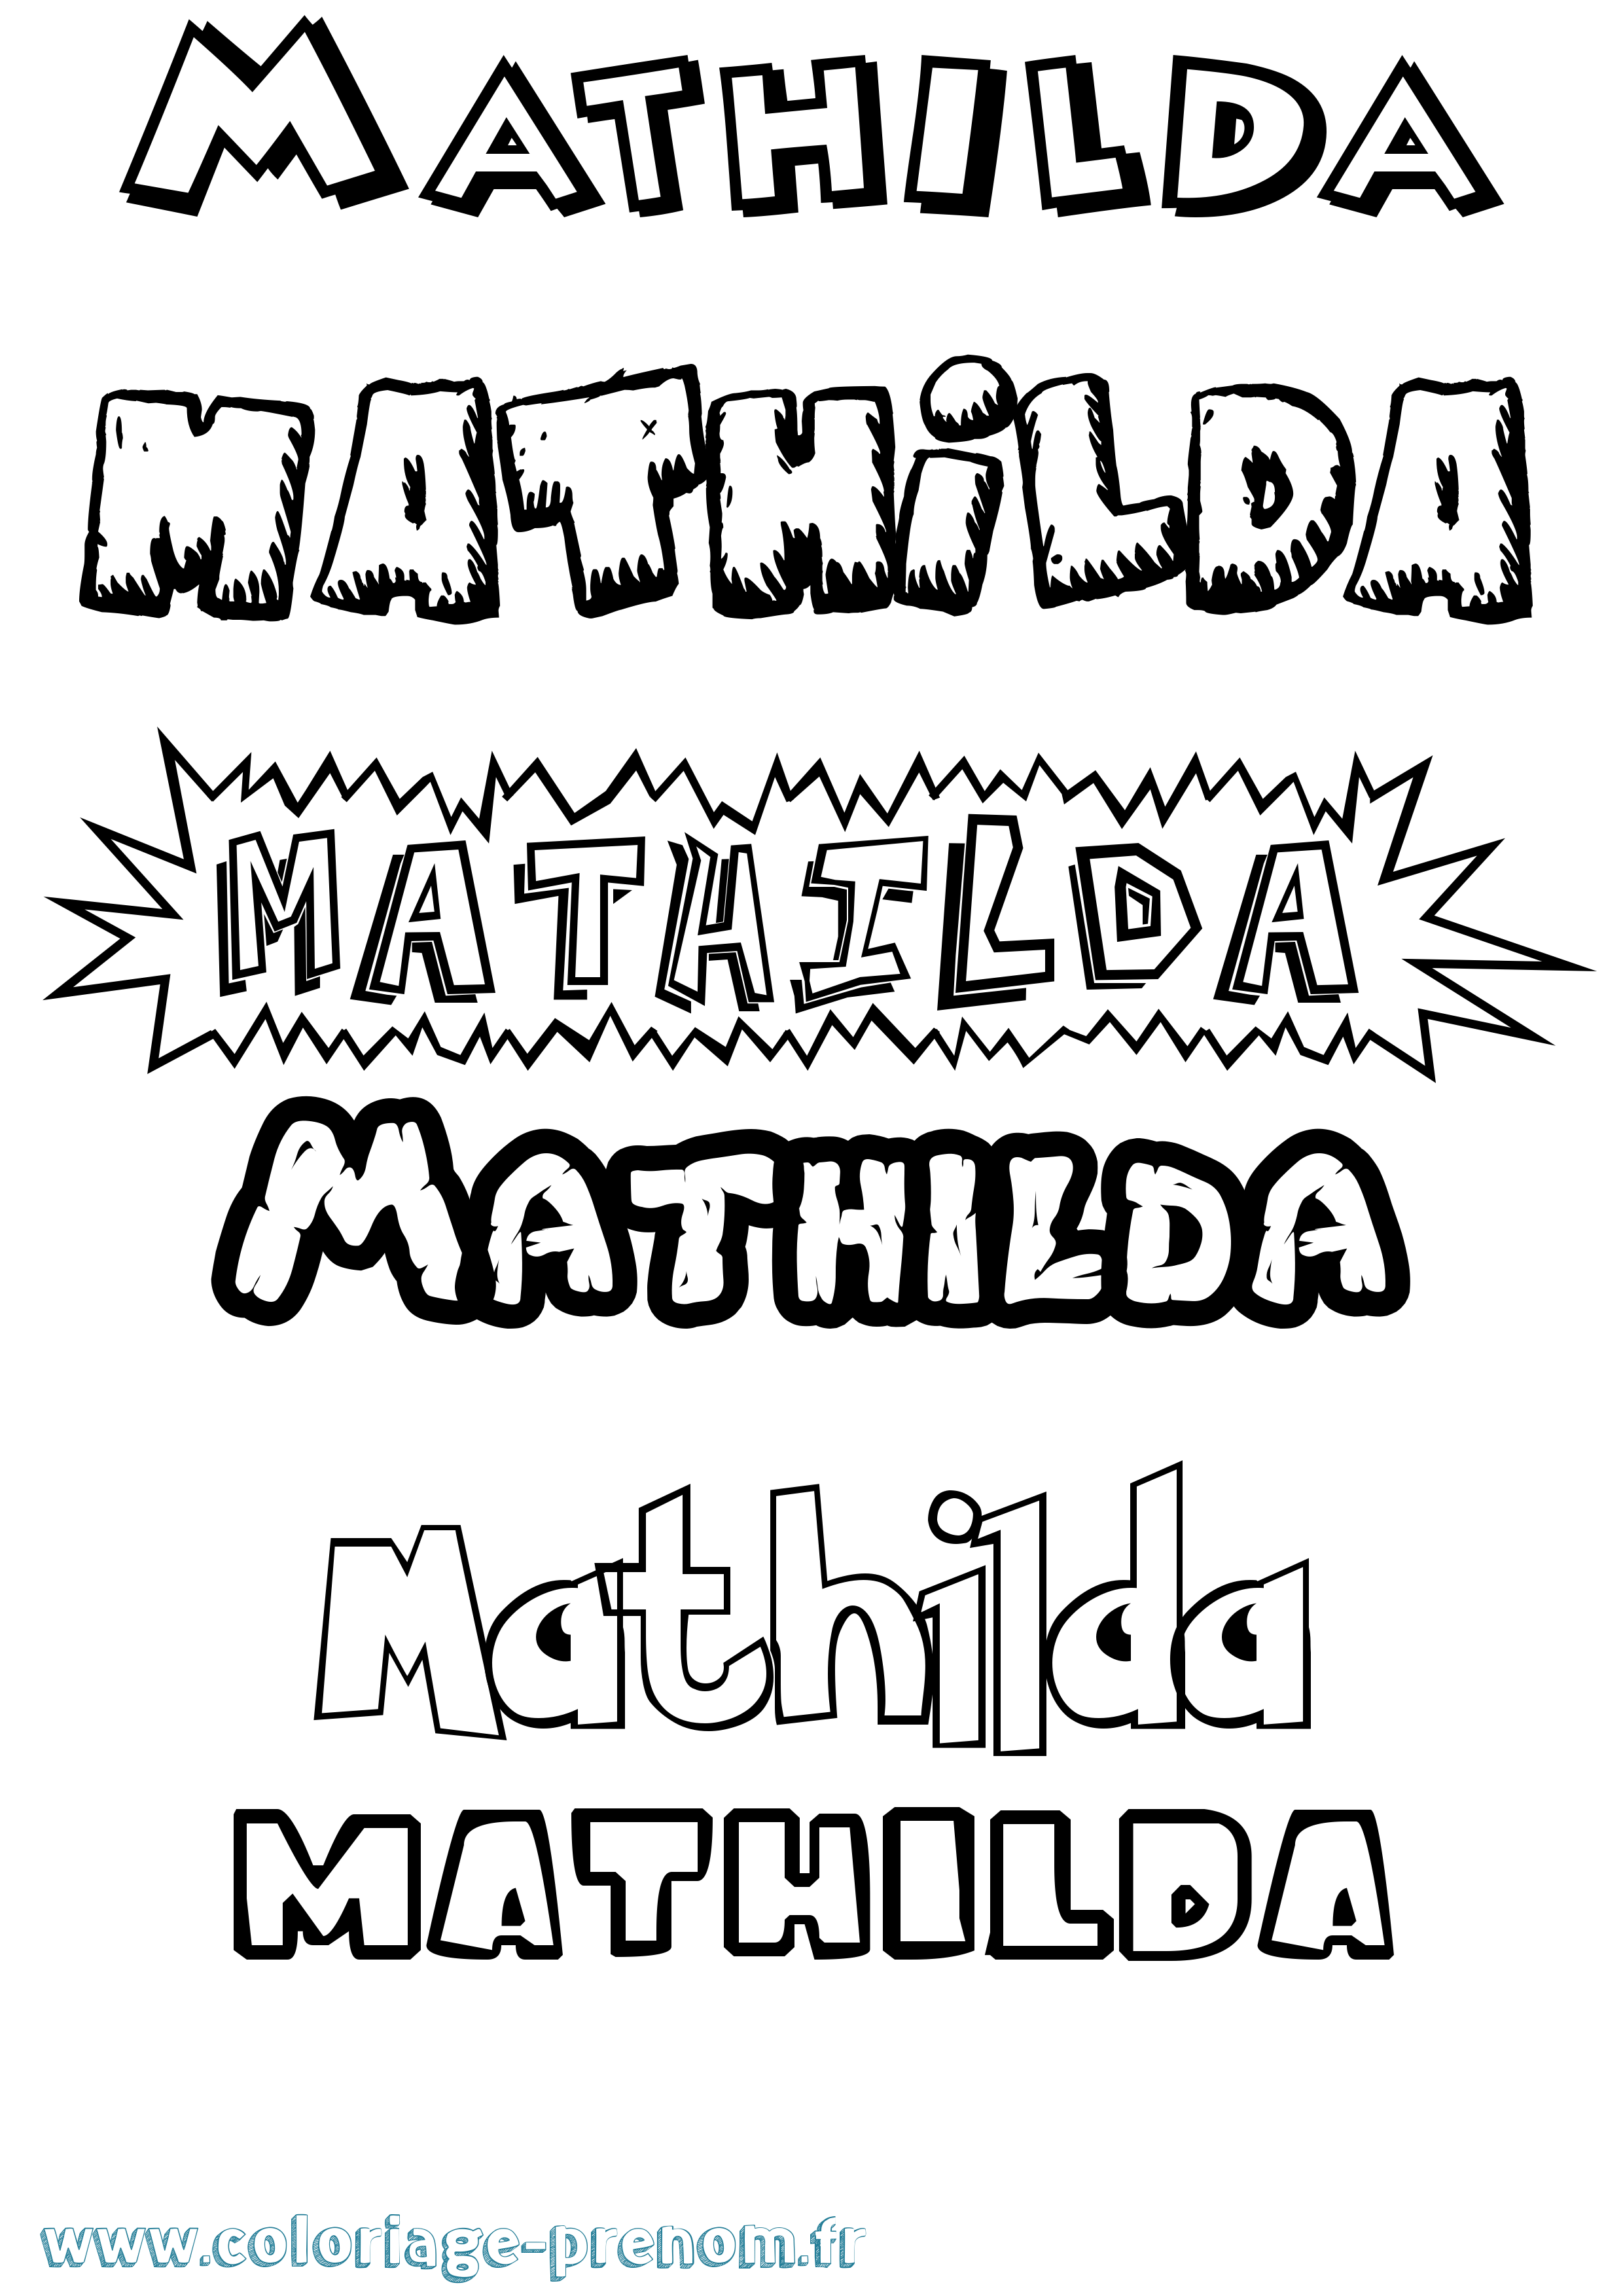 Coloriage prénom Mathilda